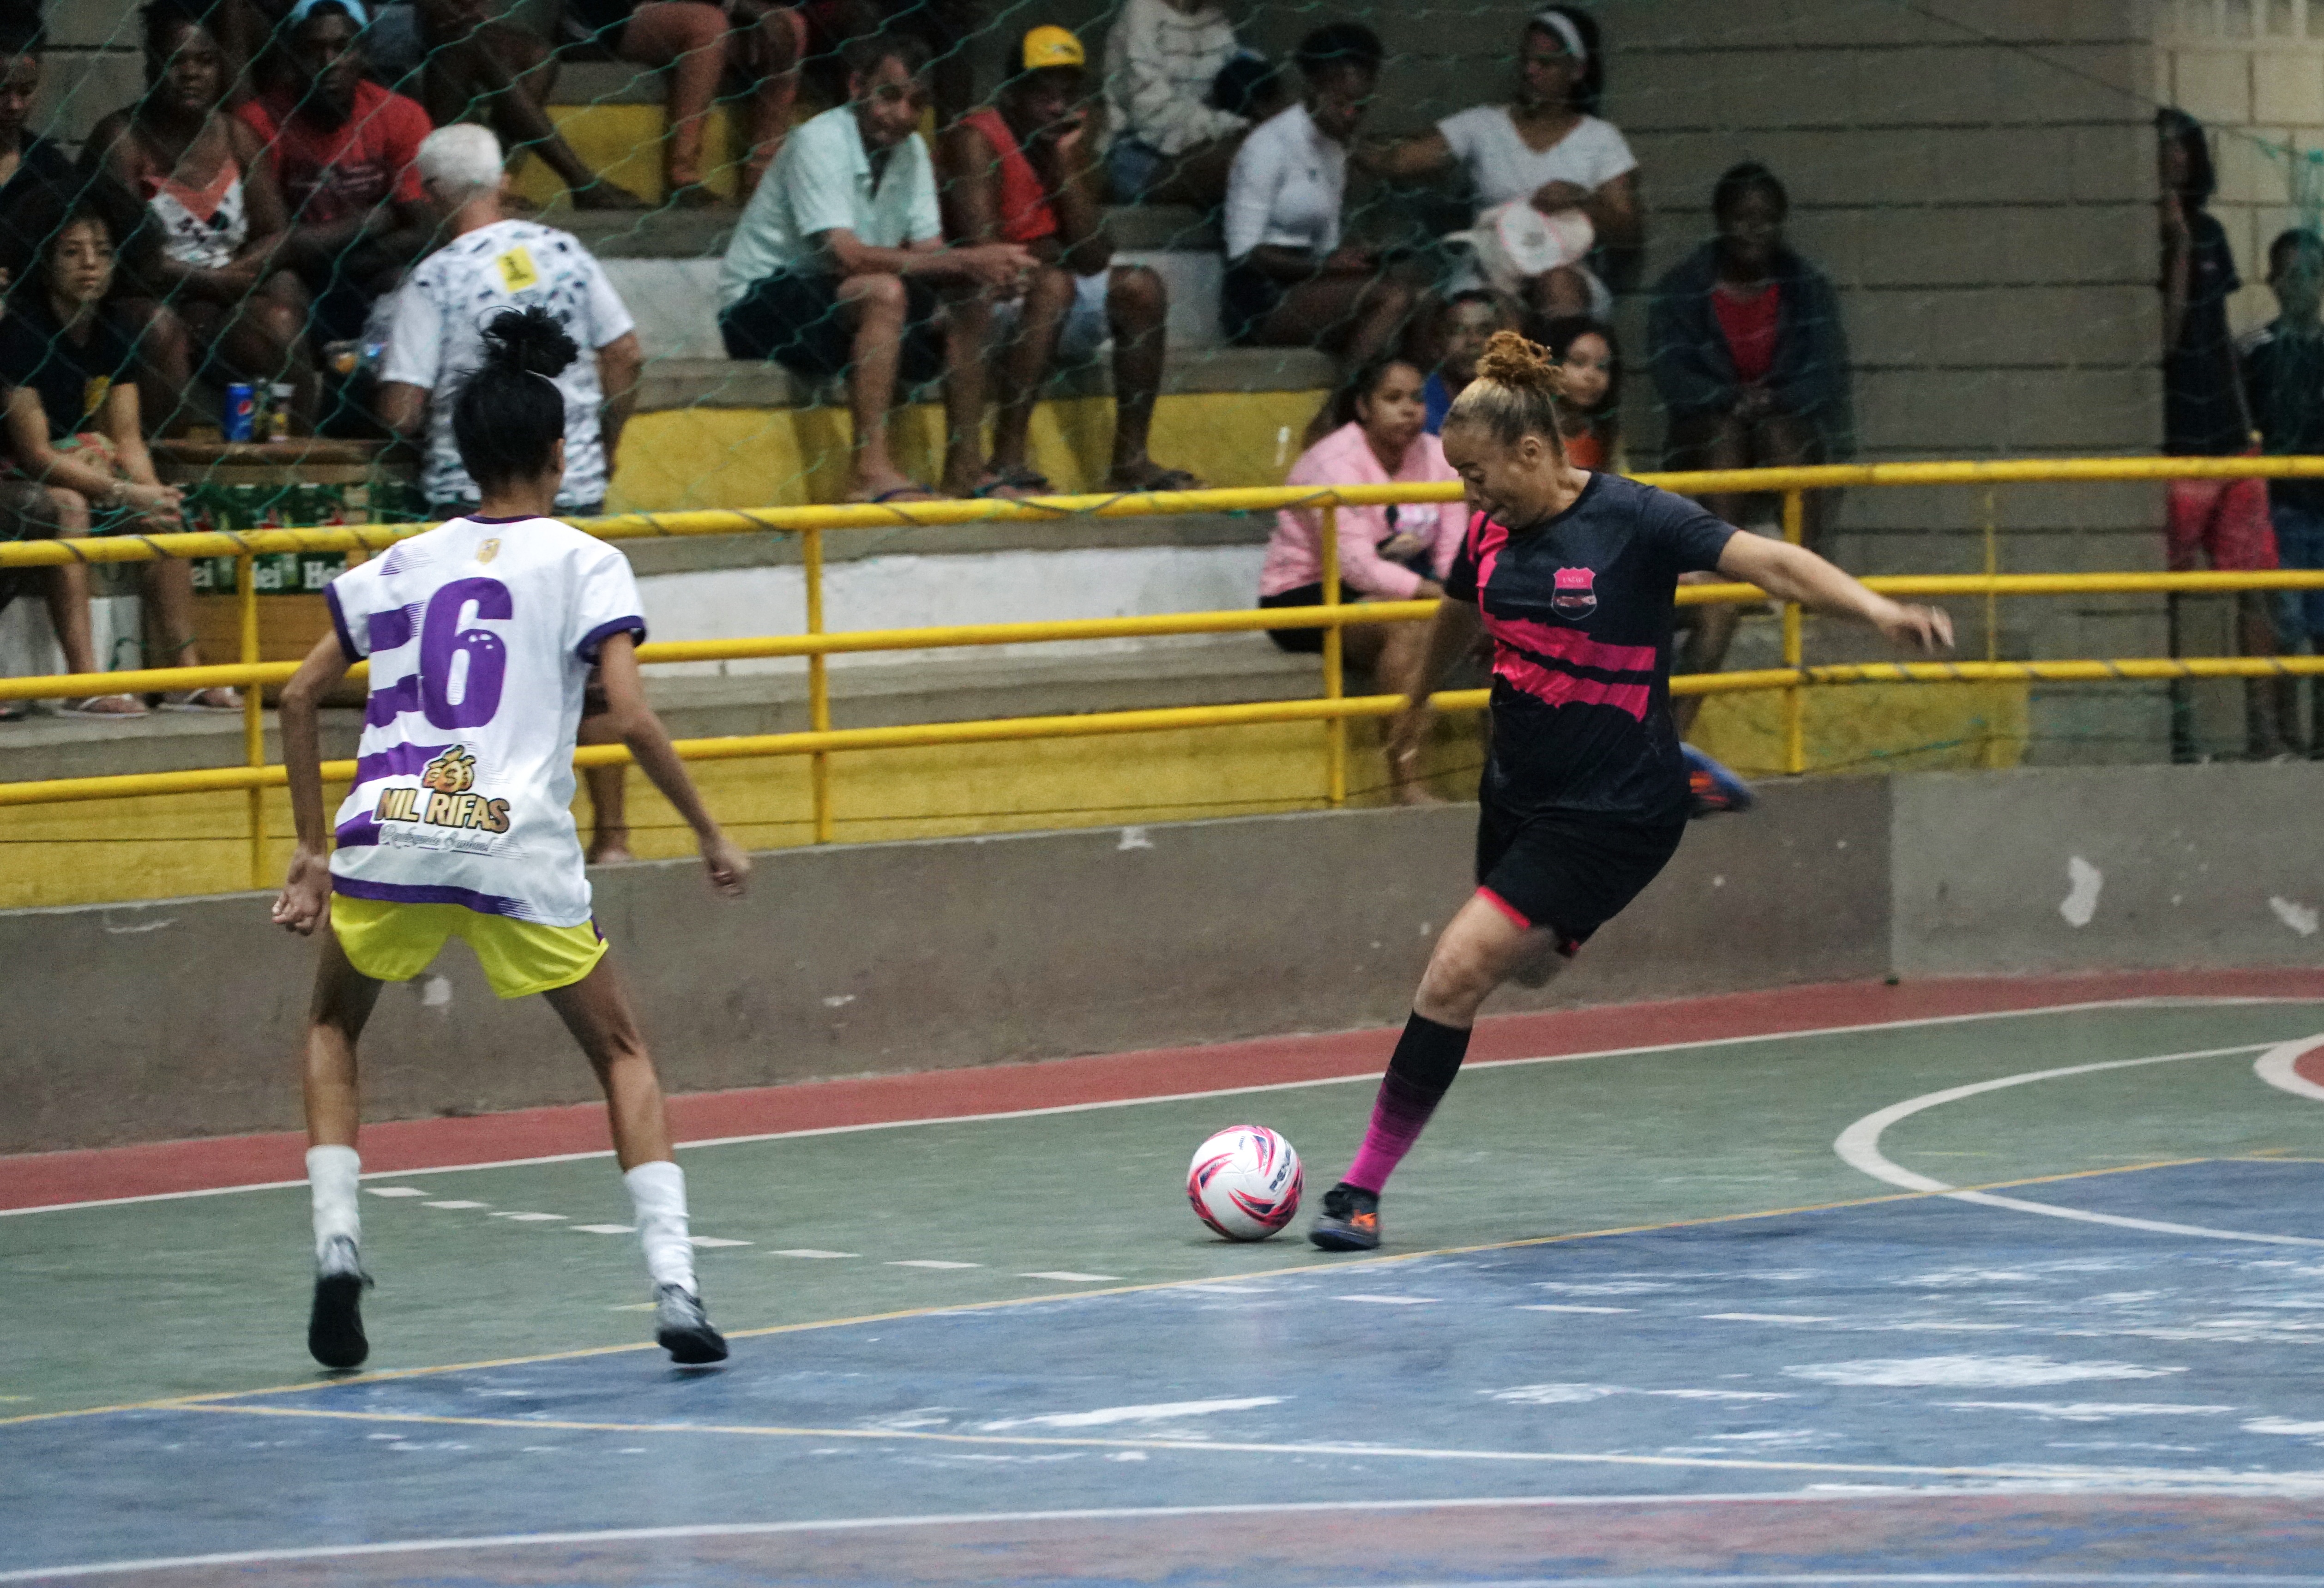 Jogos emocionantes marcam o início da Copa Cruzalmense de Futsal Feminino